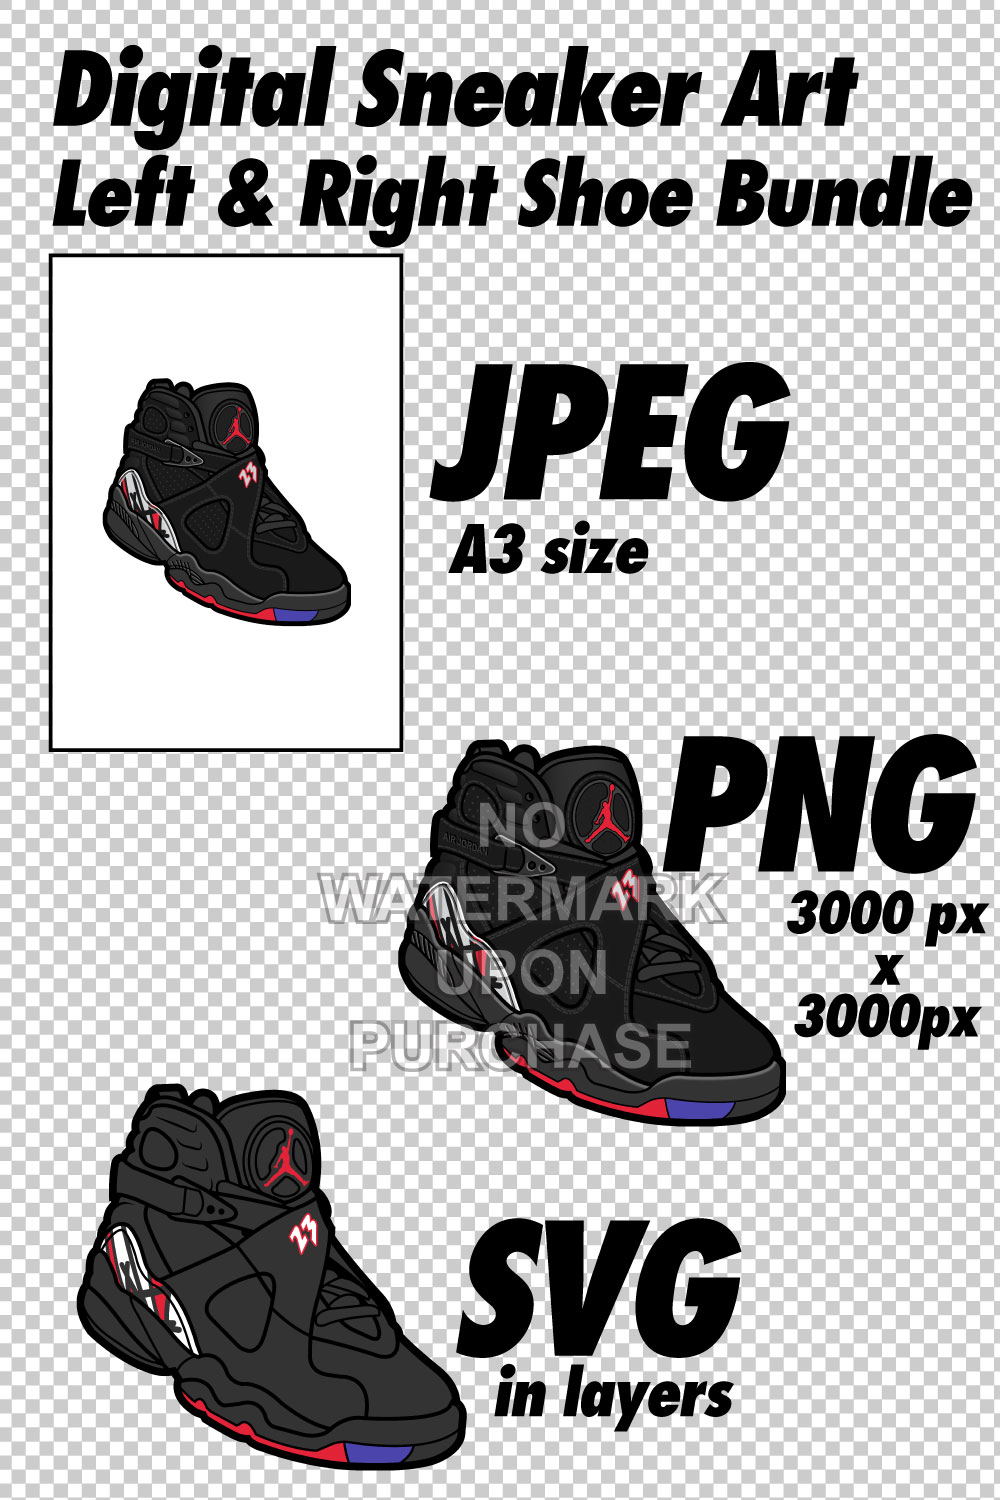 Air Jordan 8 Playoffs JPEG PNG SVG Sneaker Art right & left shoe bundle Digital Download pinterest preview image.